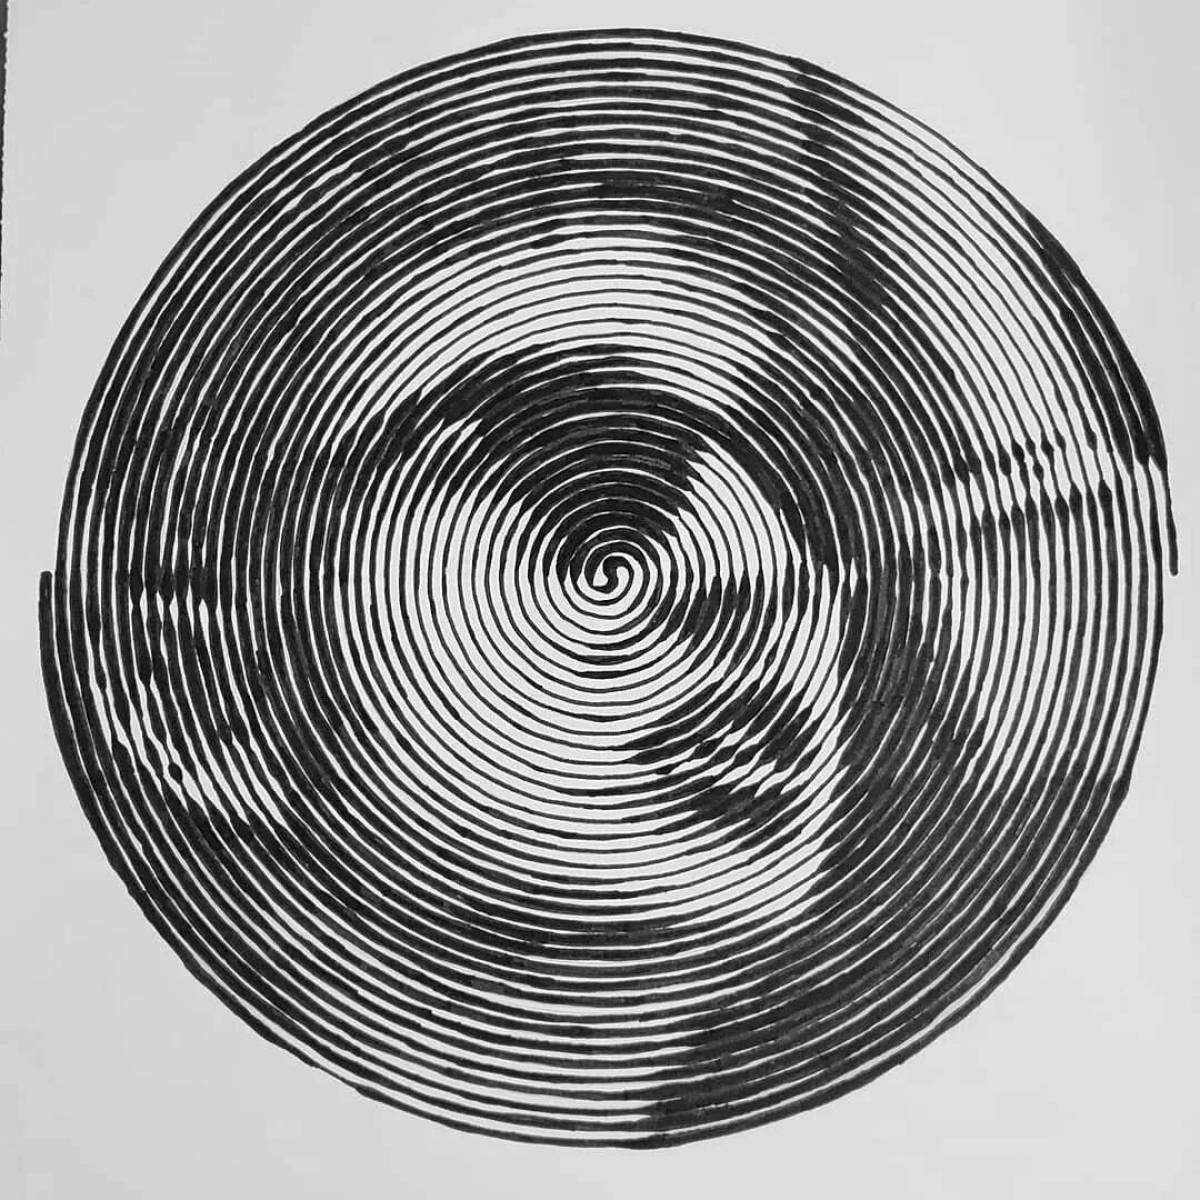 Arseny popov's magic spiral